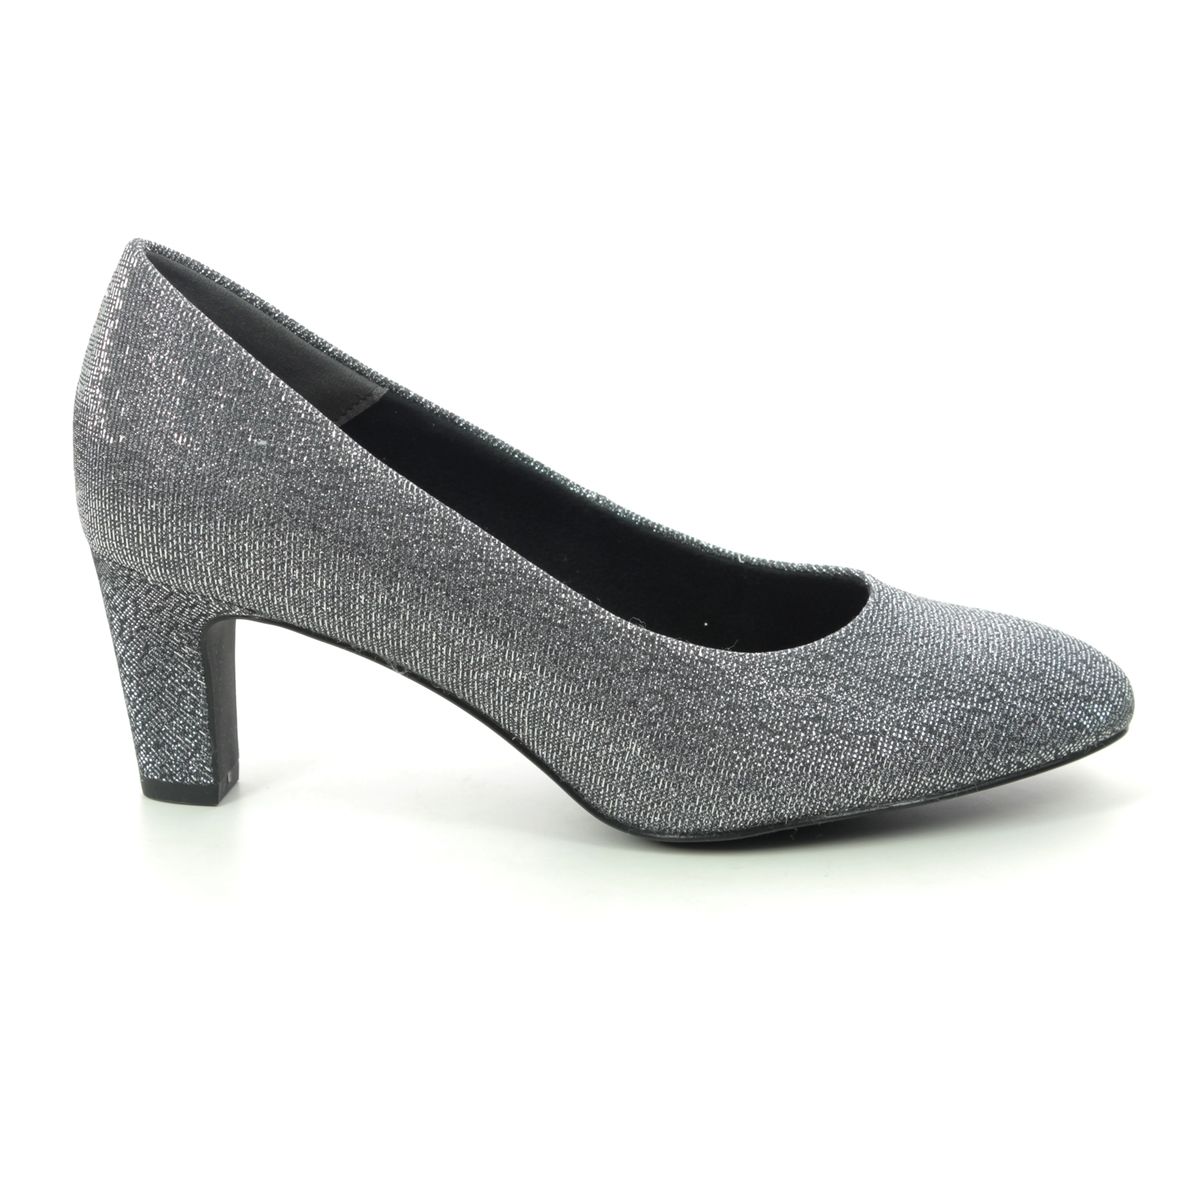 Tamaris Daenerys 22418-25-271 Silver Glitz Court Shoes